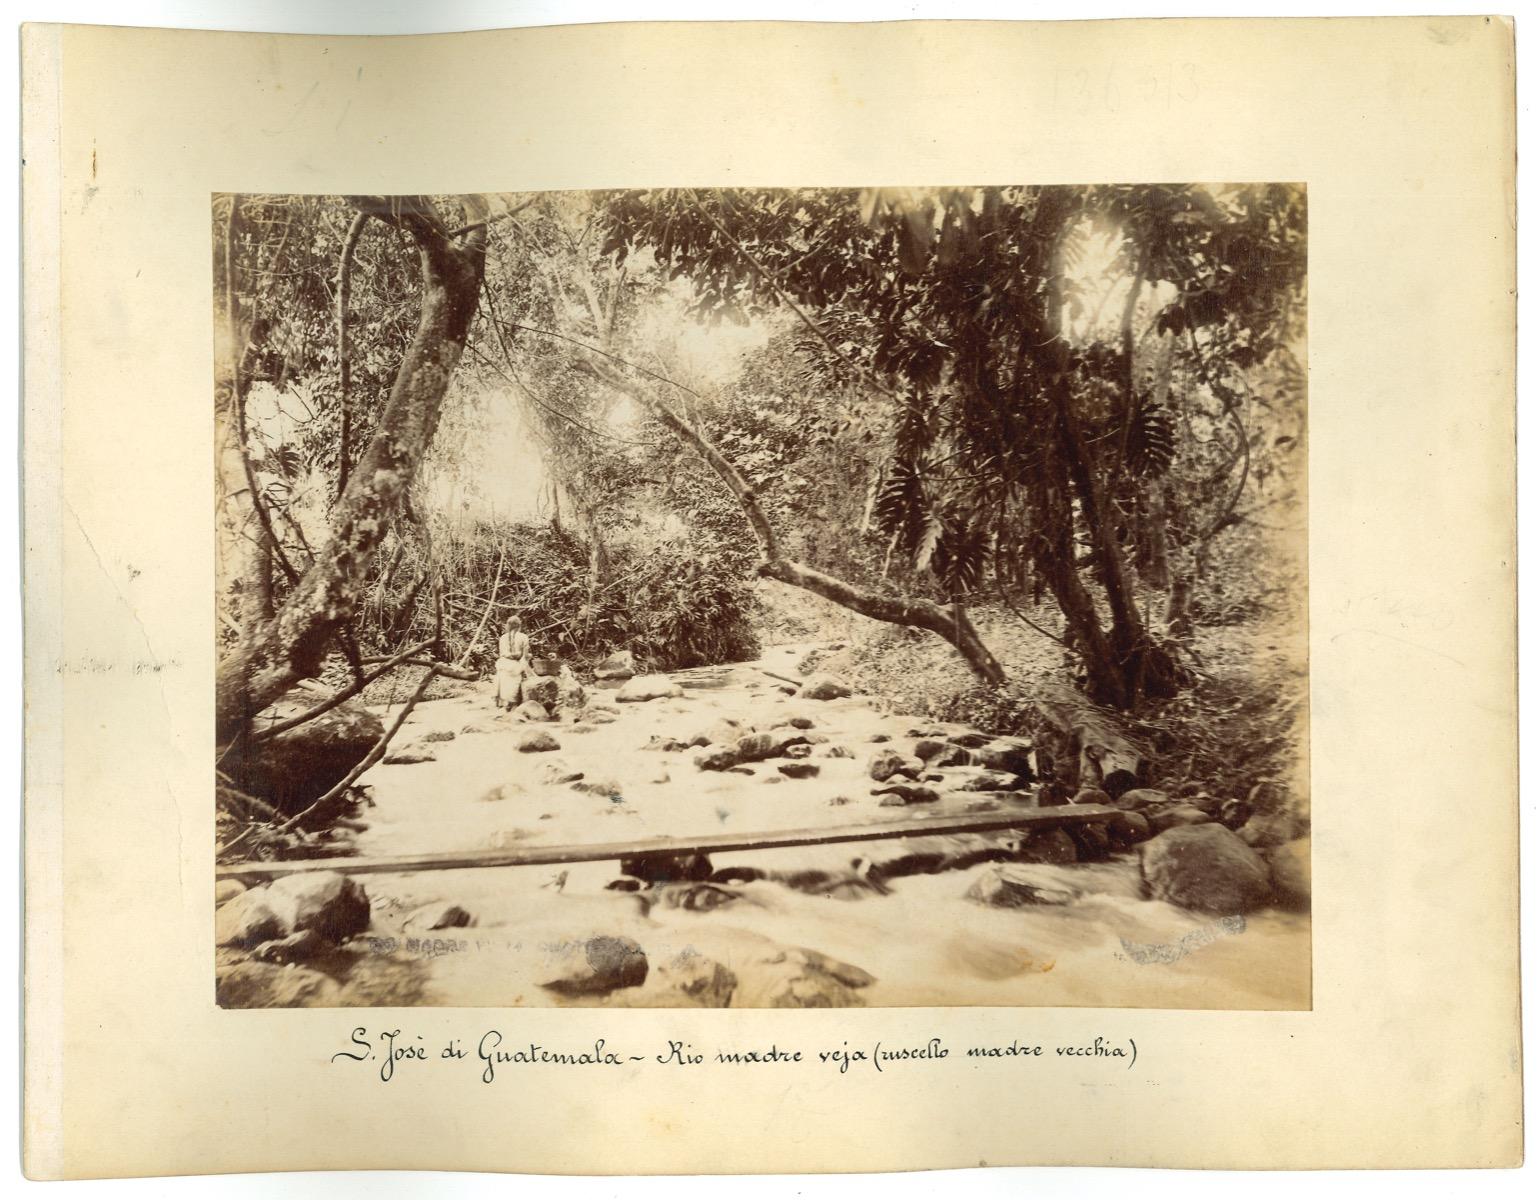 Ancient Views of S. Josè di Guatemala - Original Vintage Photo - 1880s - Photograph by Unknown